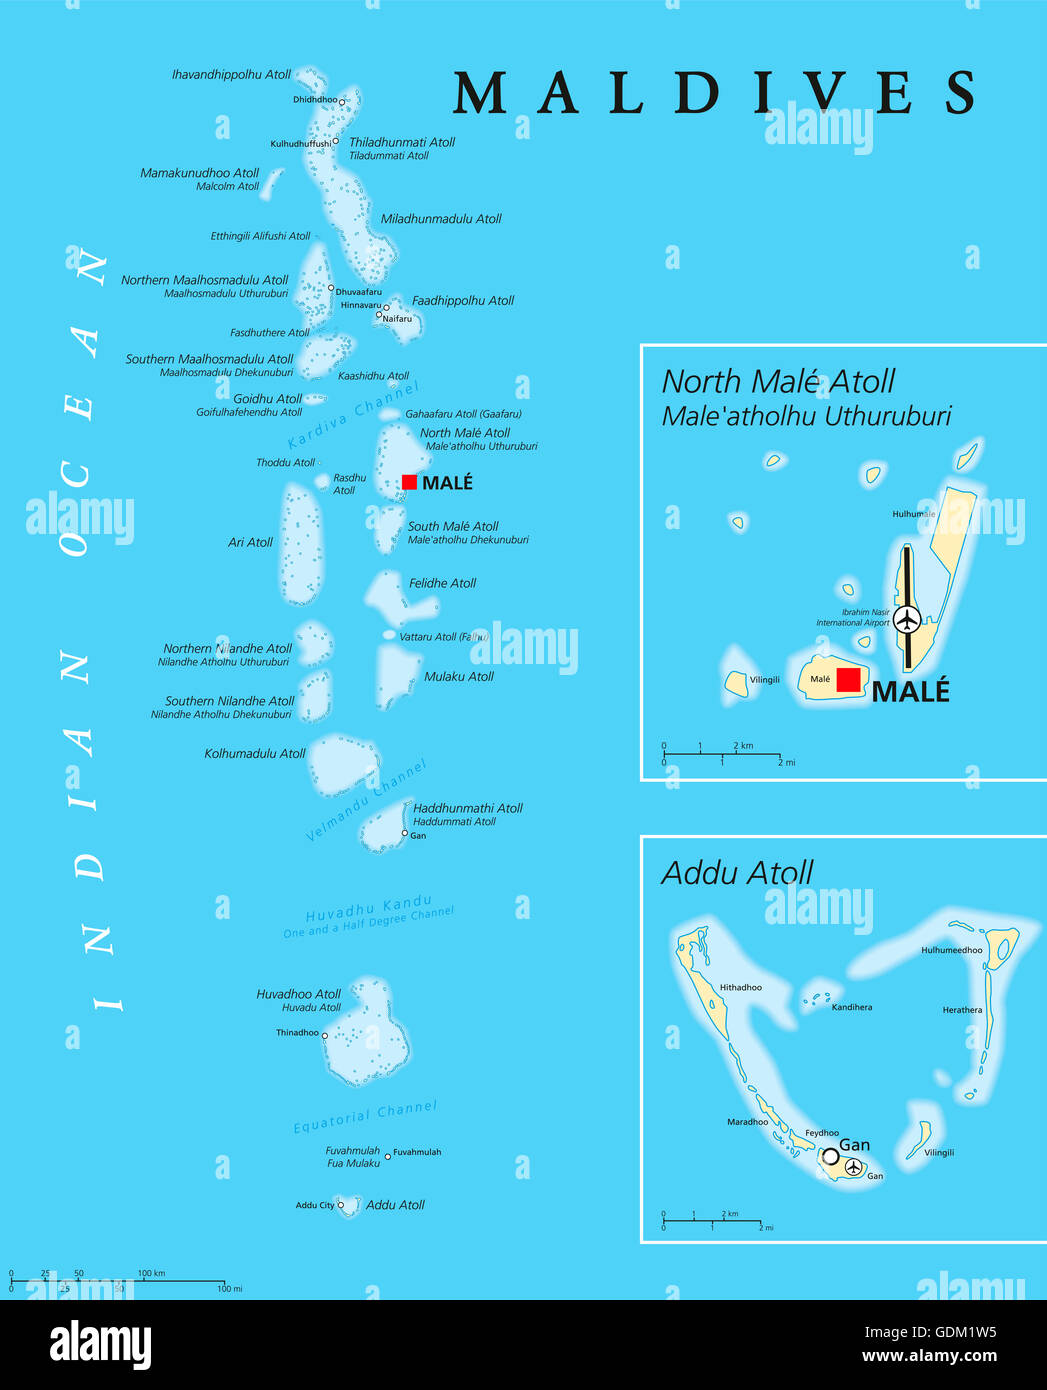 The maldives map fotografías e imágenes de alta resolución - Alamy